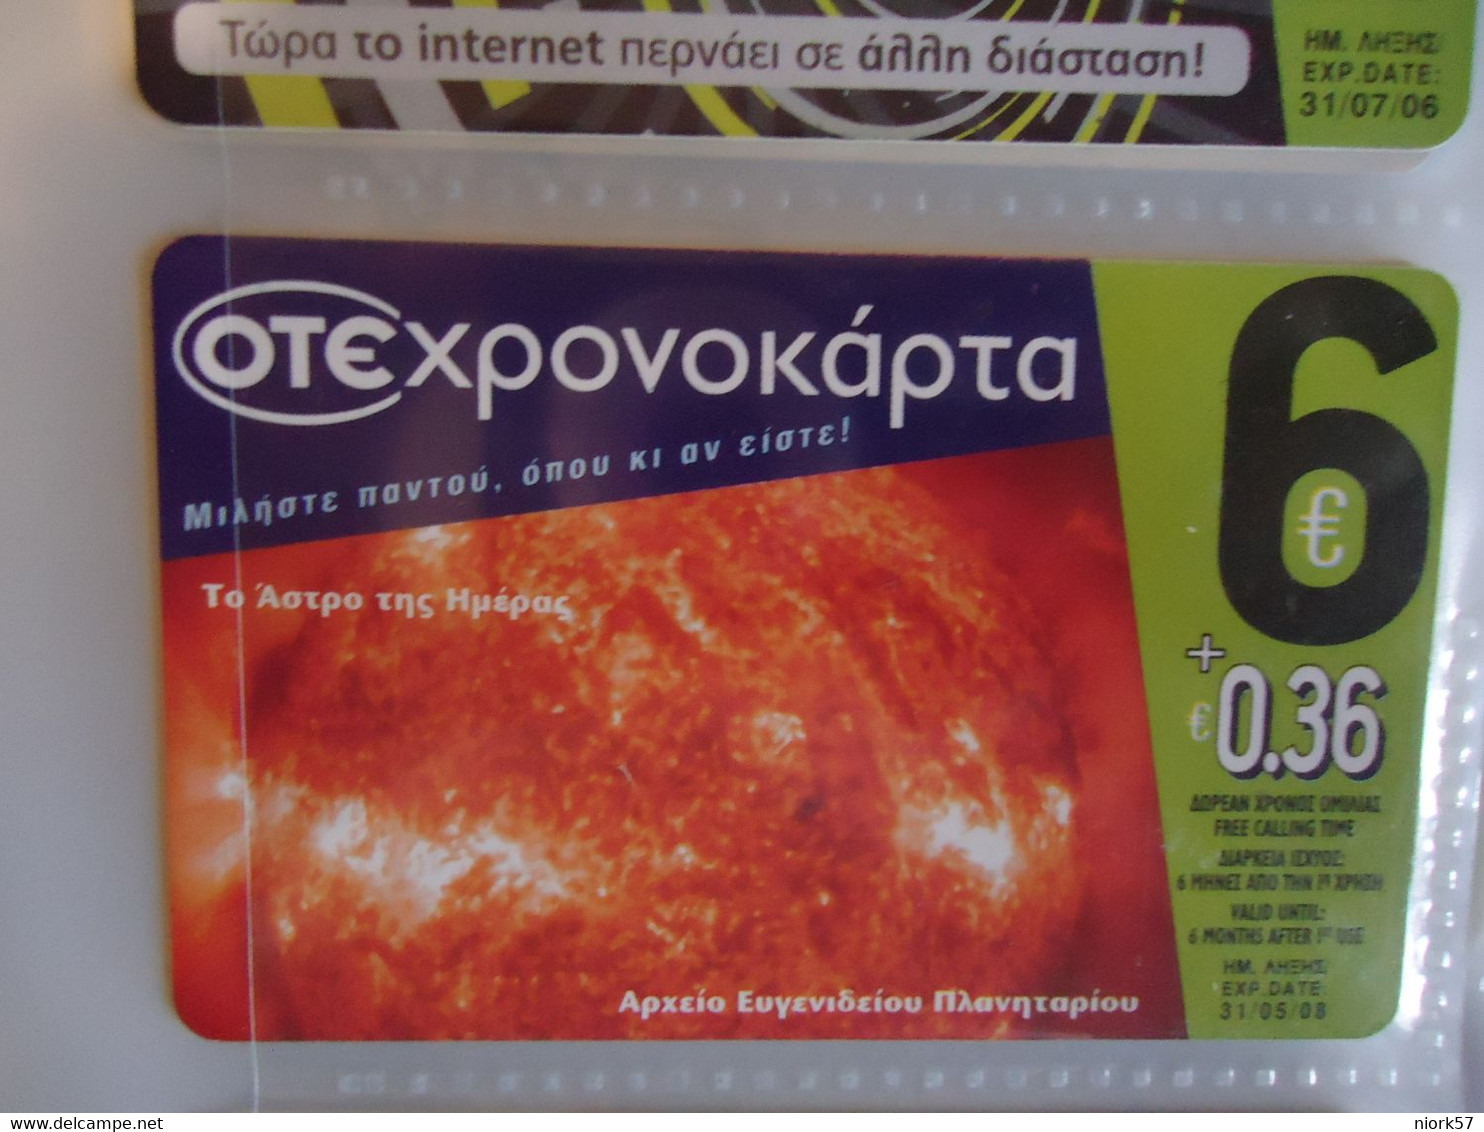 GREECE USED PREPAID CARDS  SPACE PLANET - Espacio